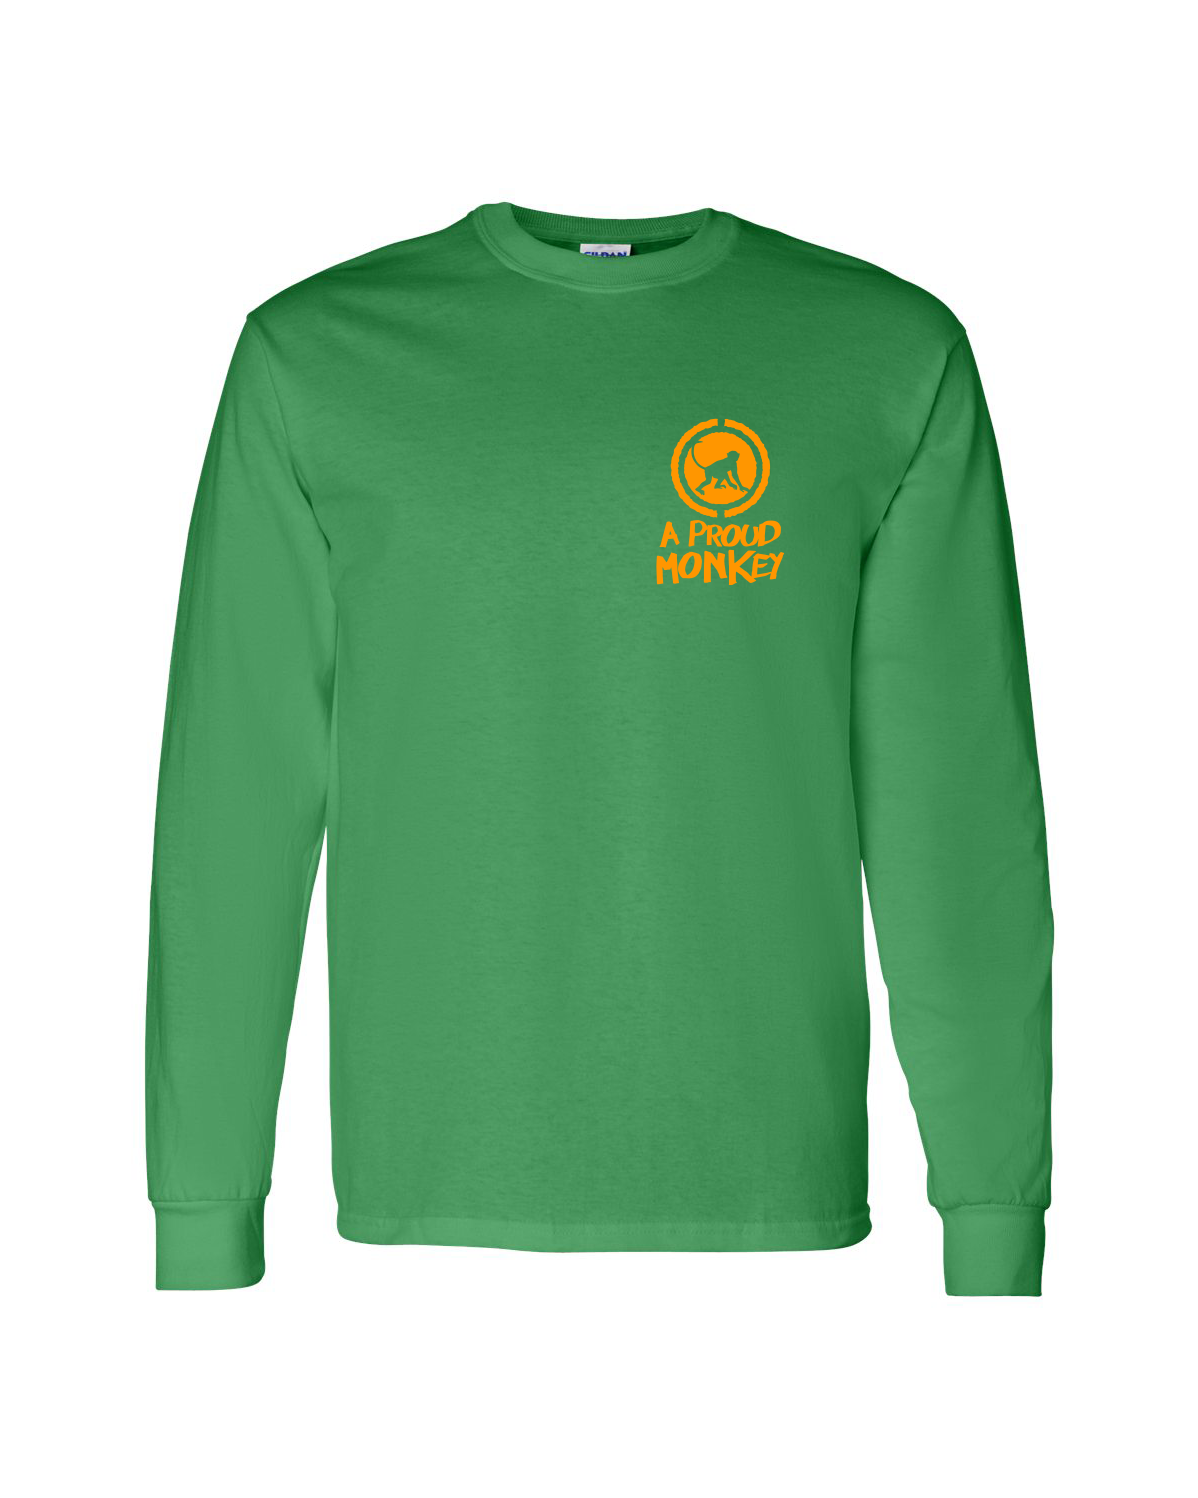 A Proud Monkey - Irish Green & Orange Long-Sleeve Shirt